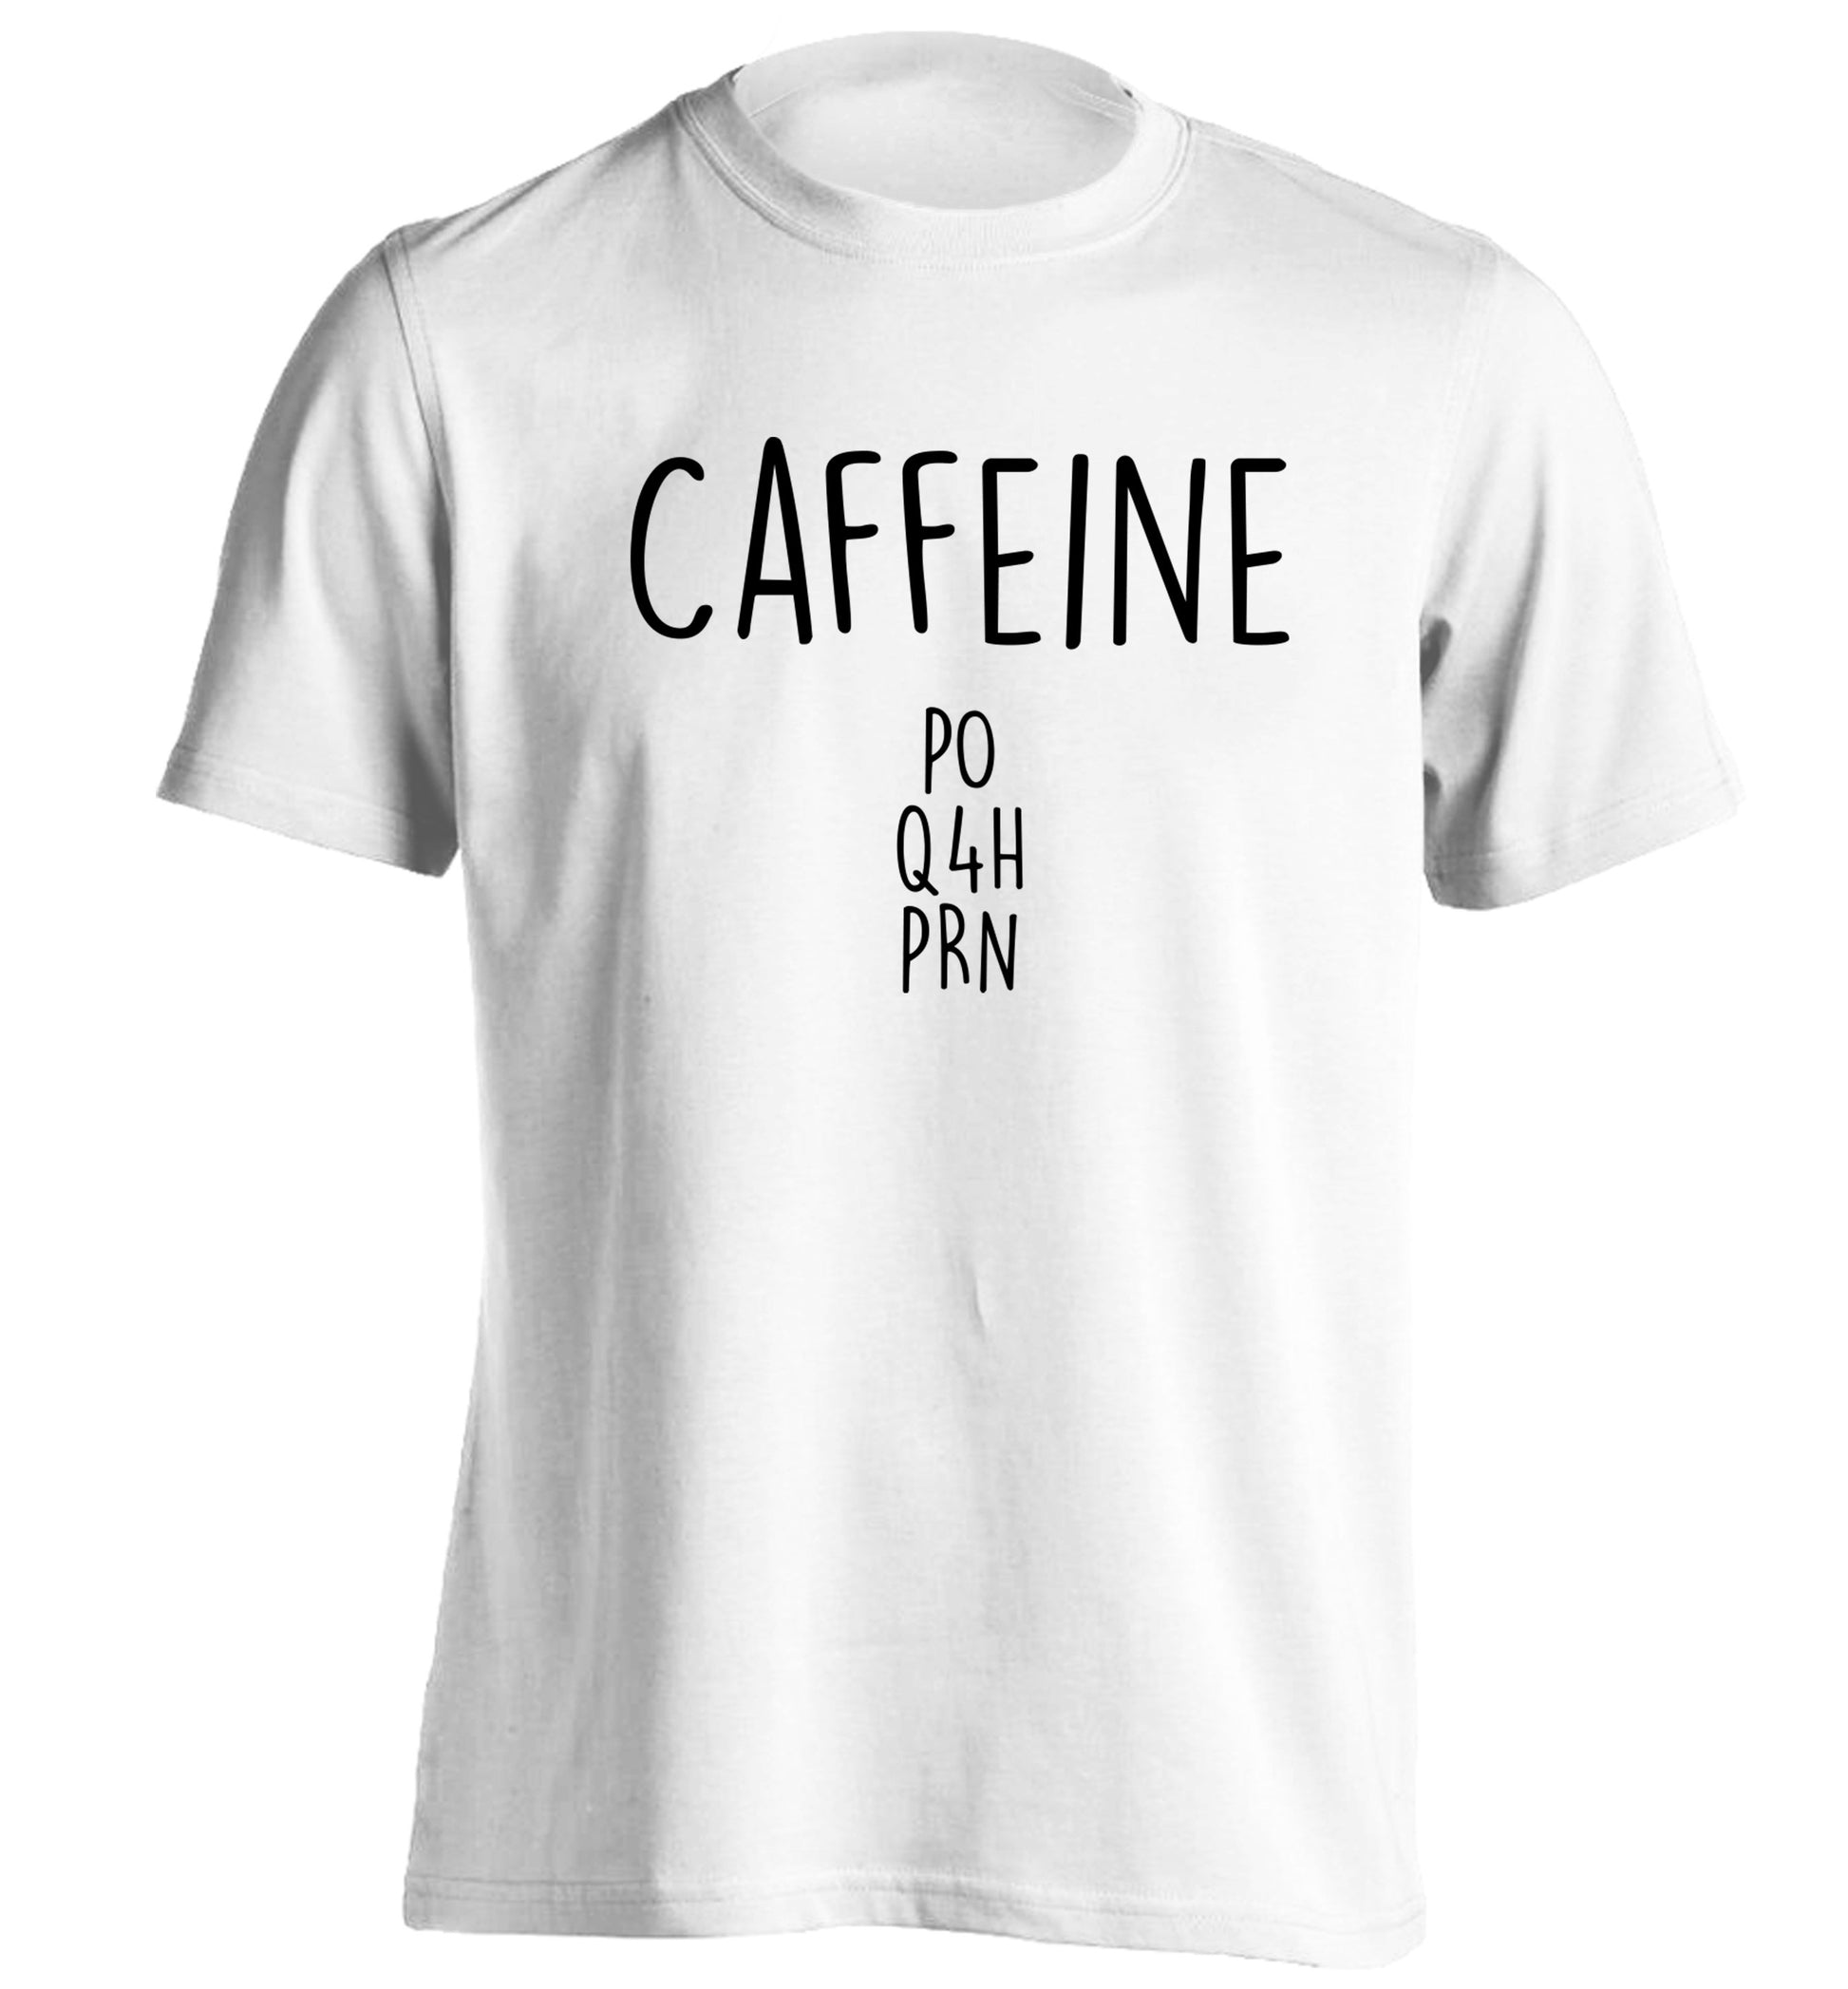 Caffeine PO Q4H PRN adults unisex white Tshirt 2XL